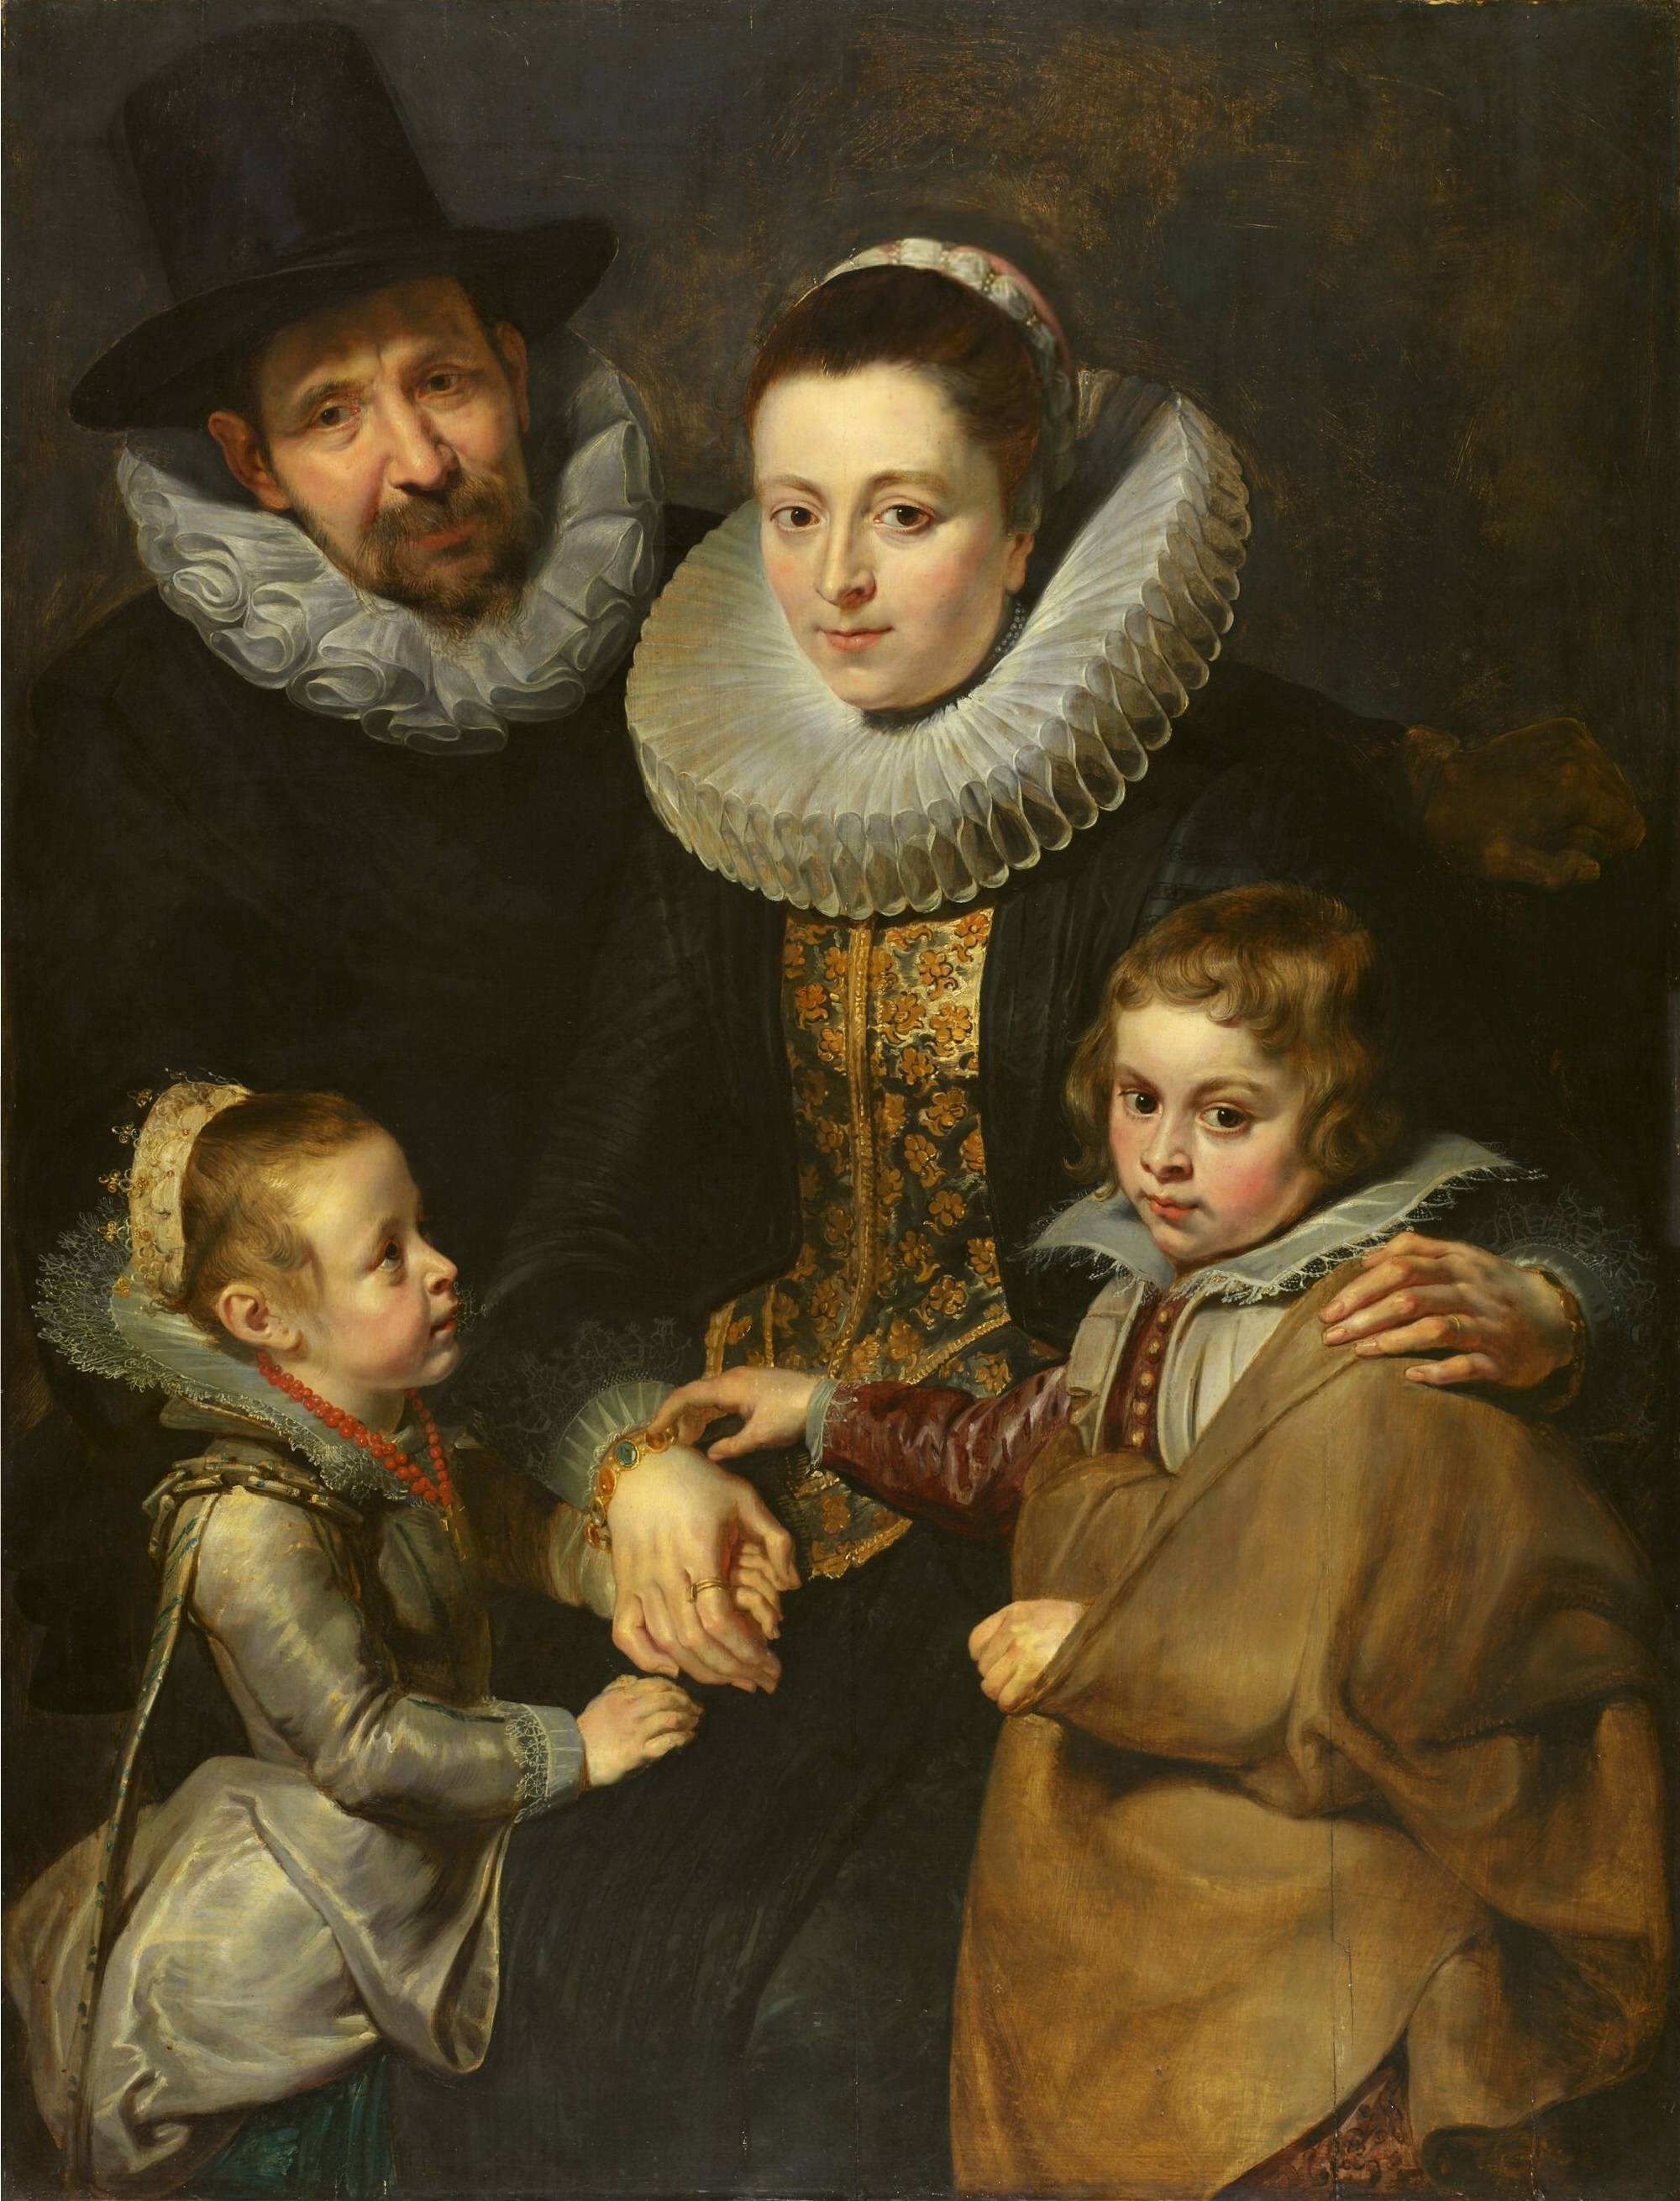 Peter Paul Rubens (1613-1615)